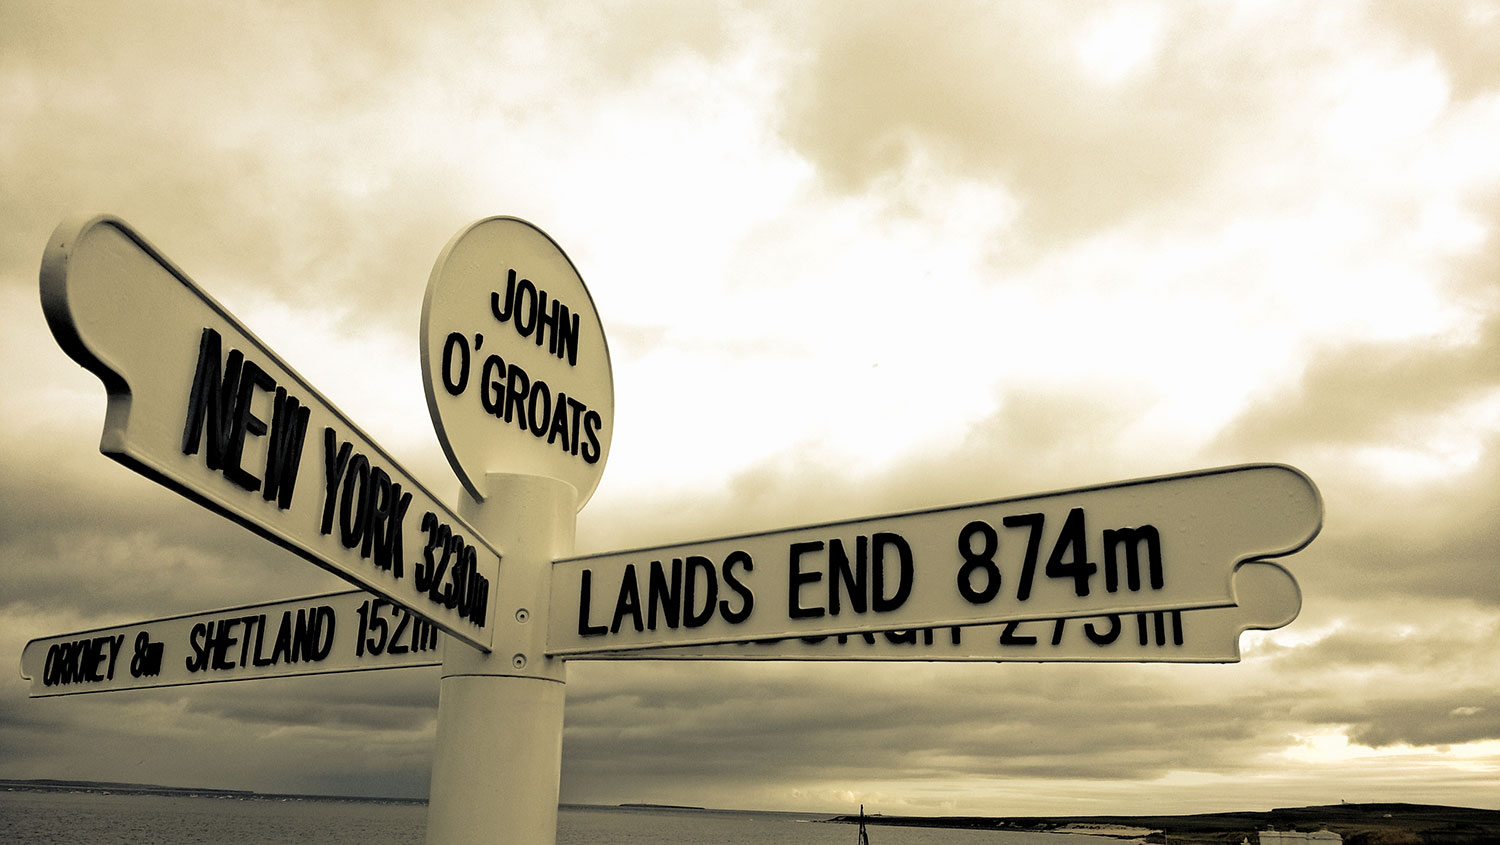 Distances from John O'Groats